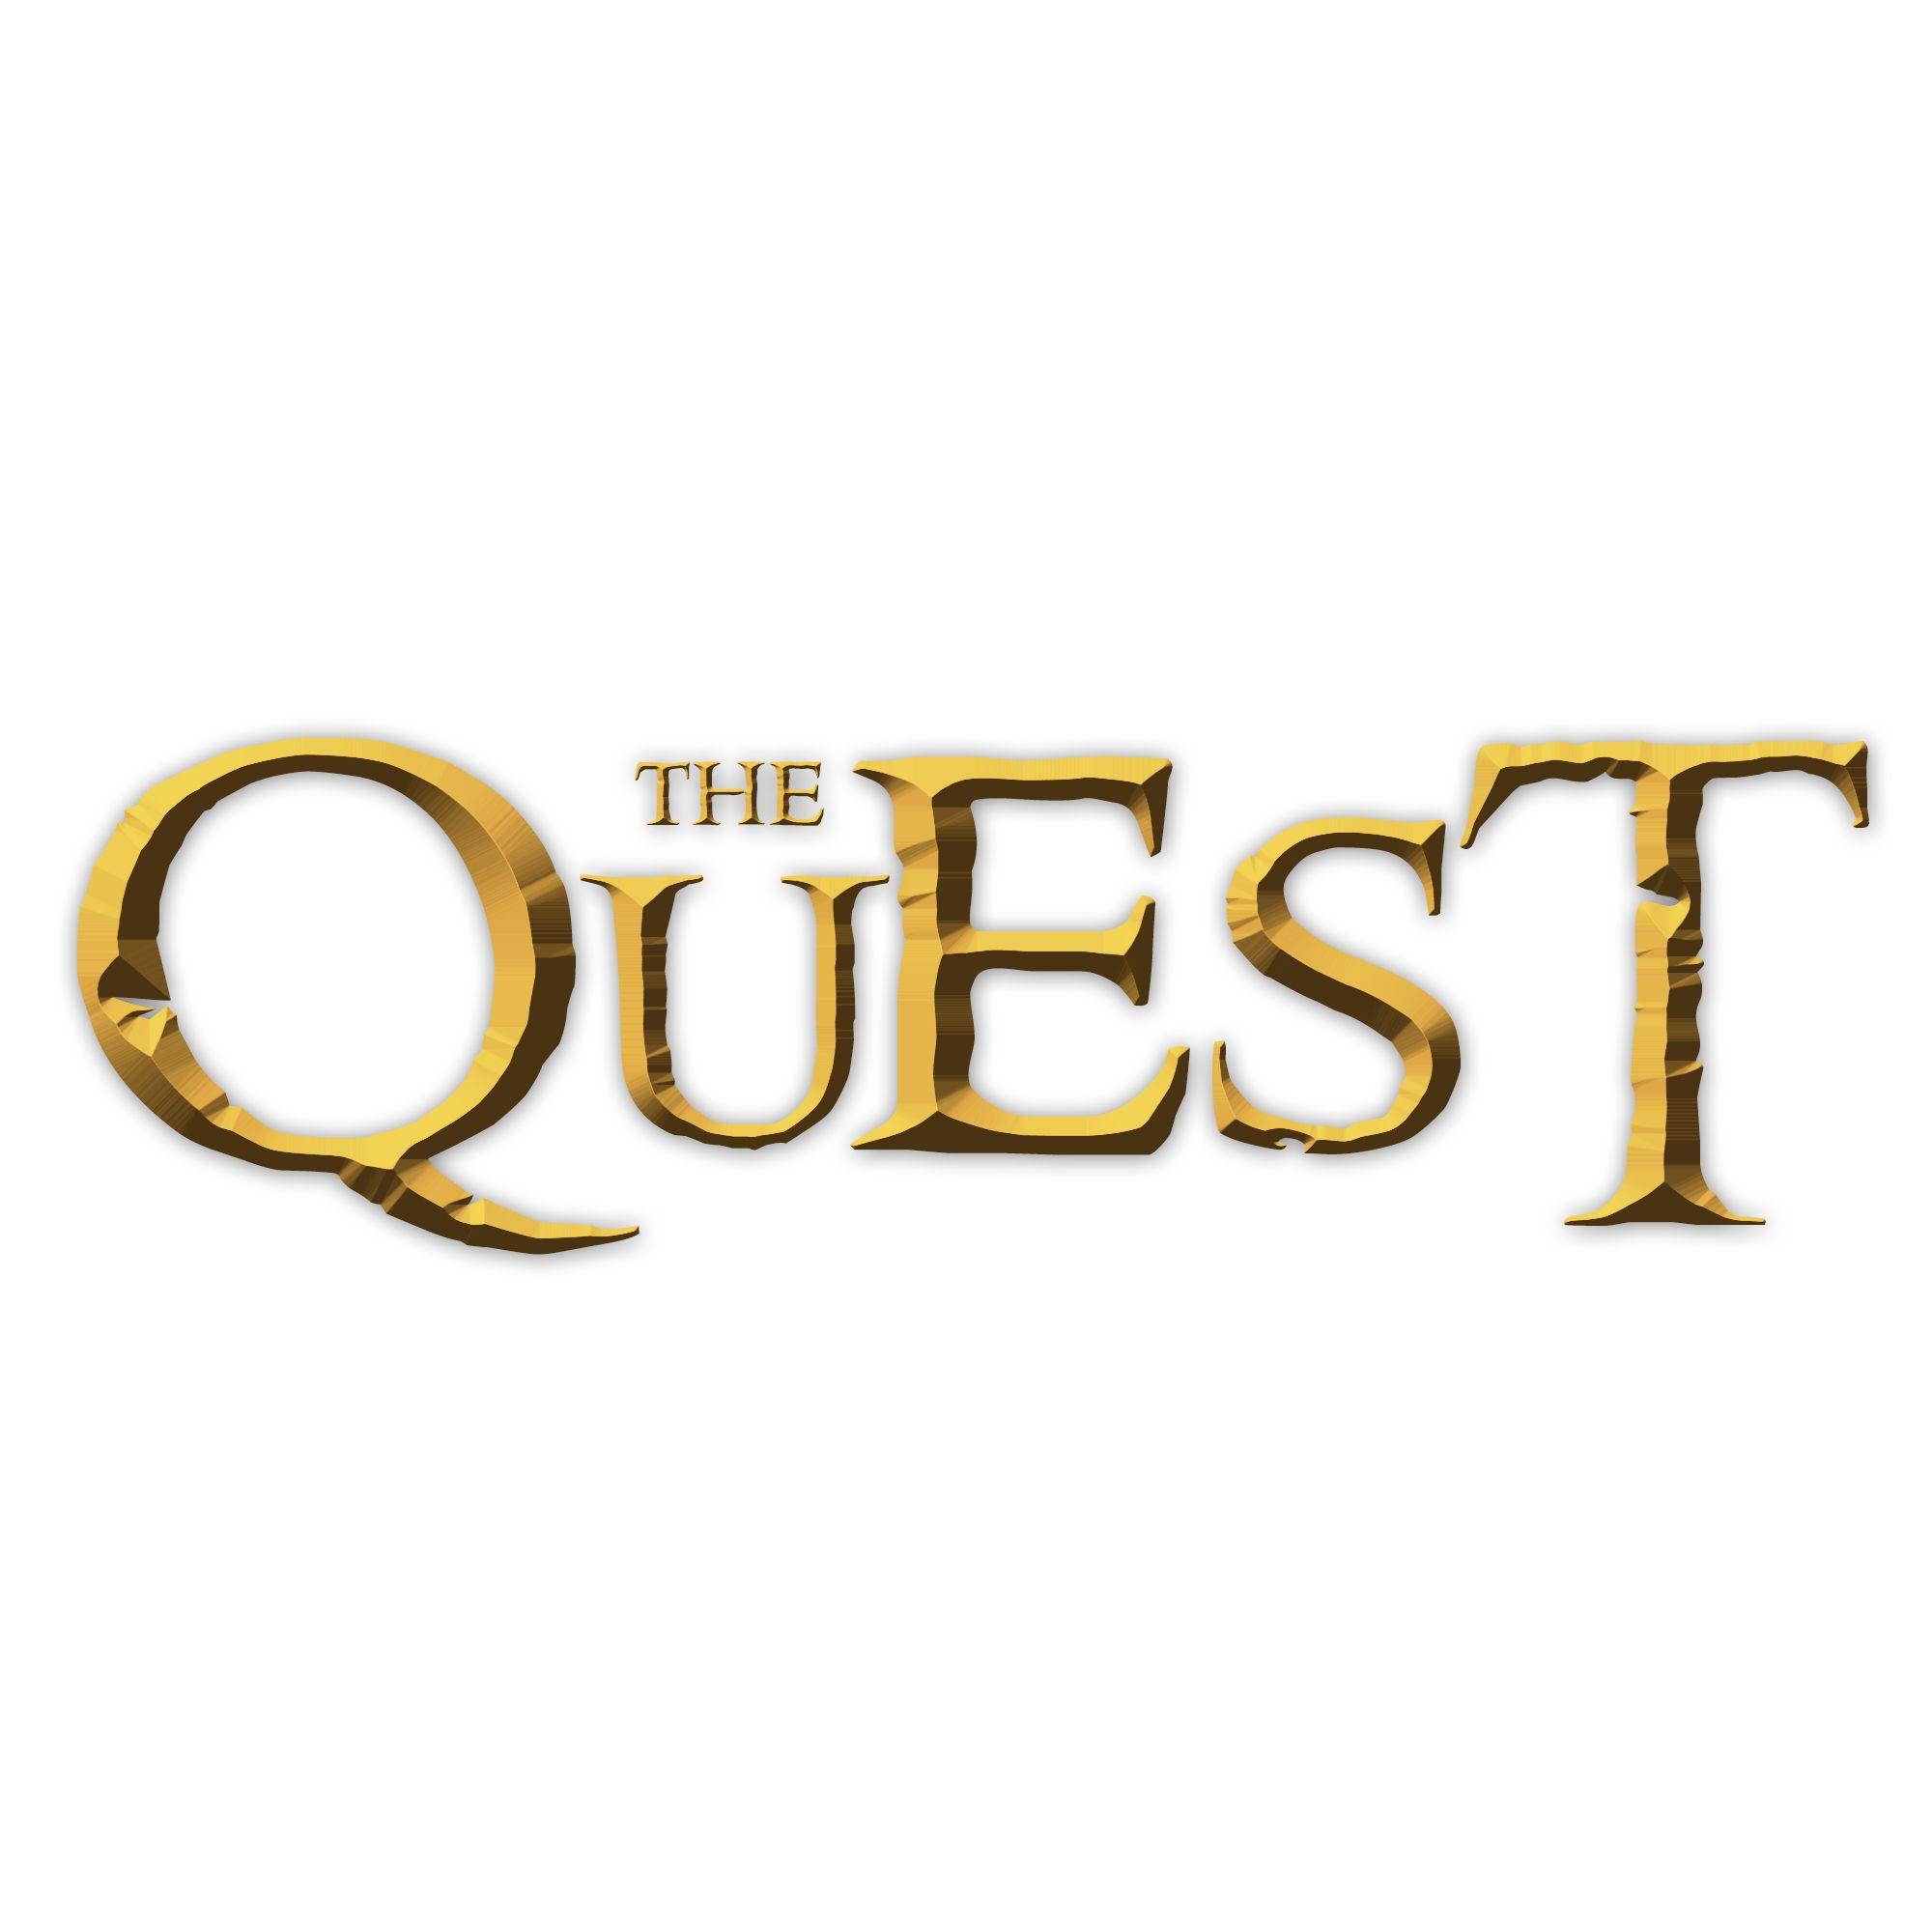 Quest Logo - The Quest logo. Snow Hill Baptist Church